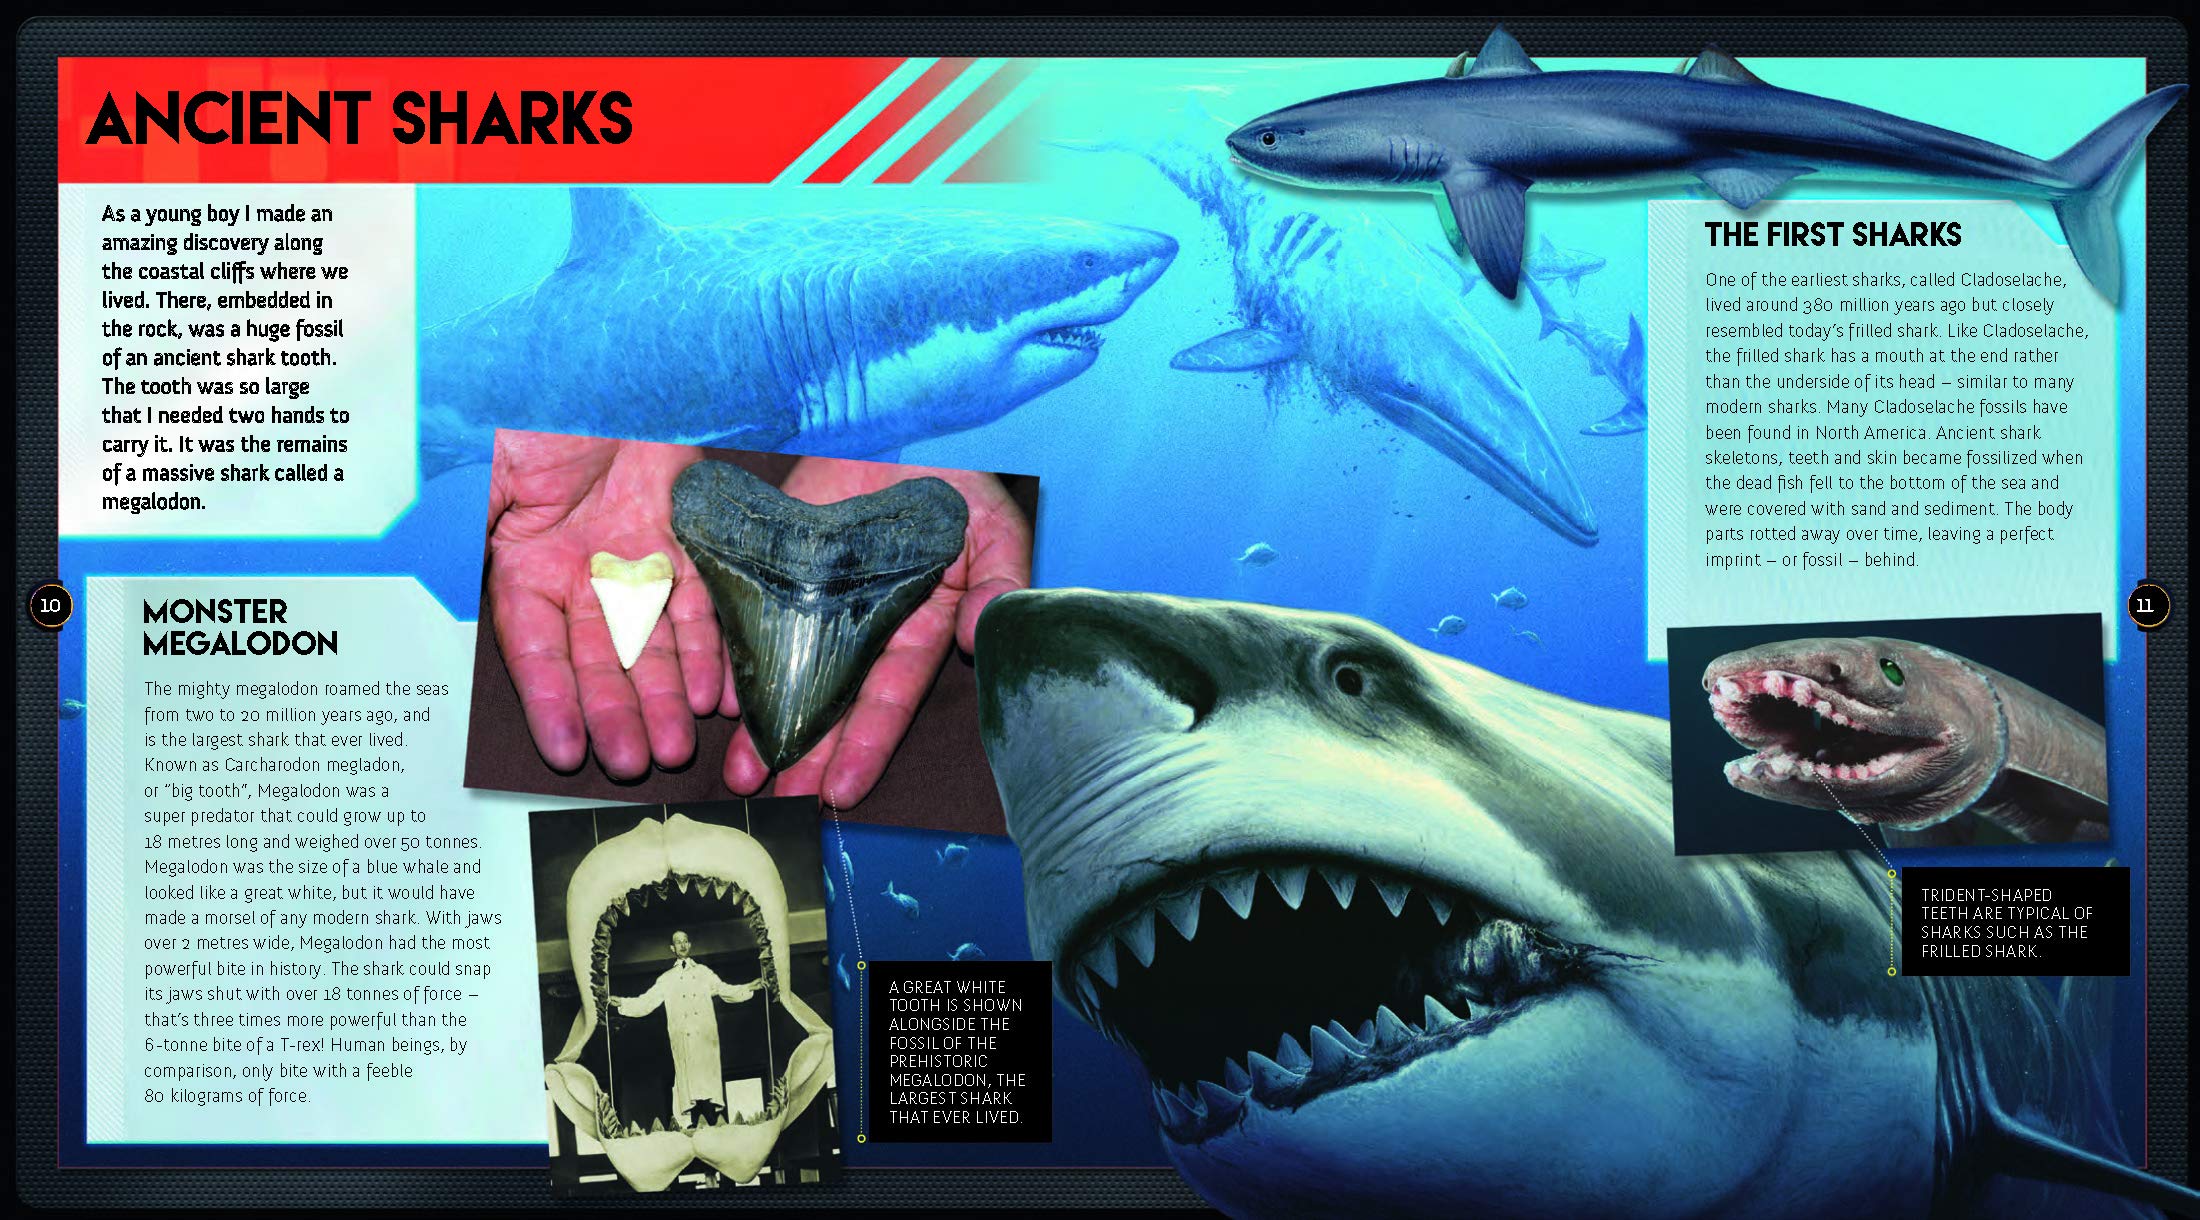 Sharks: Get up Close to Natures Fiercest Predators